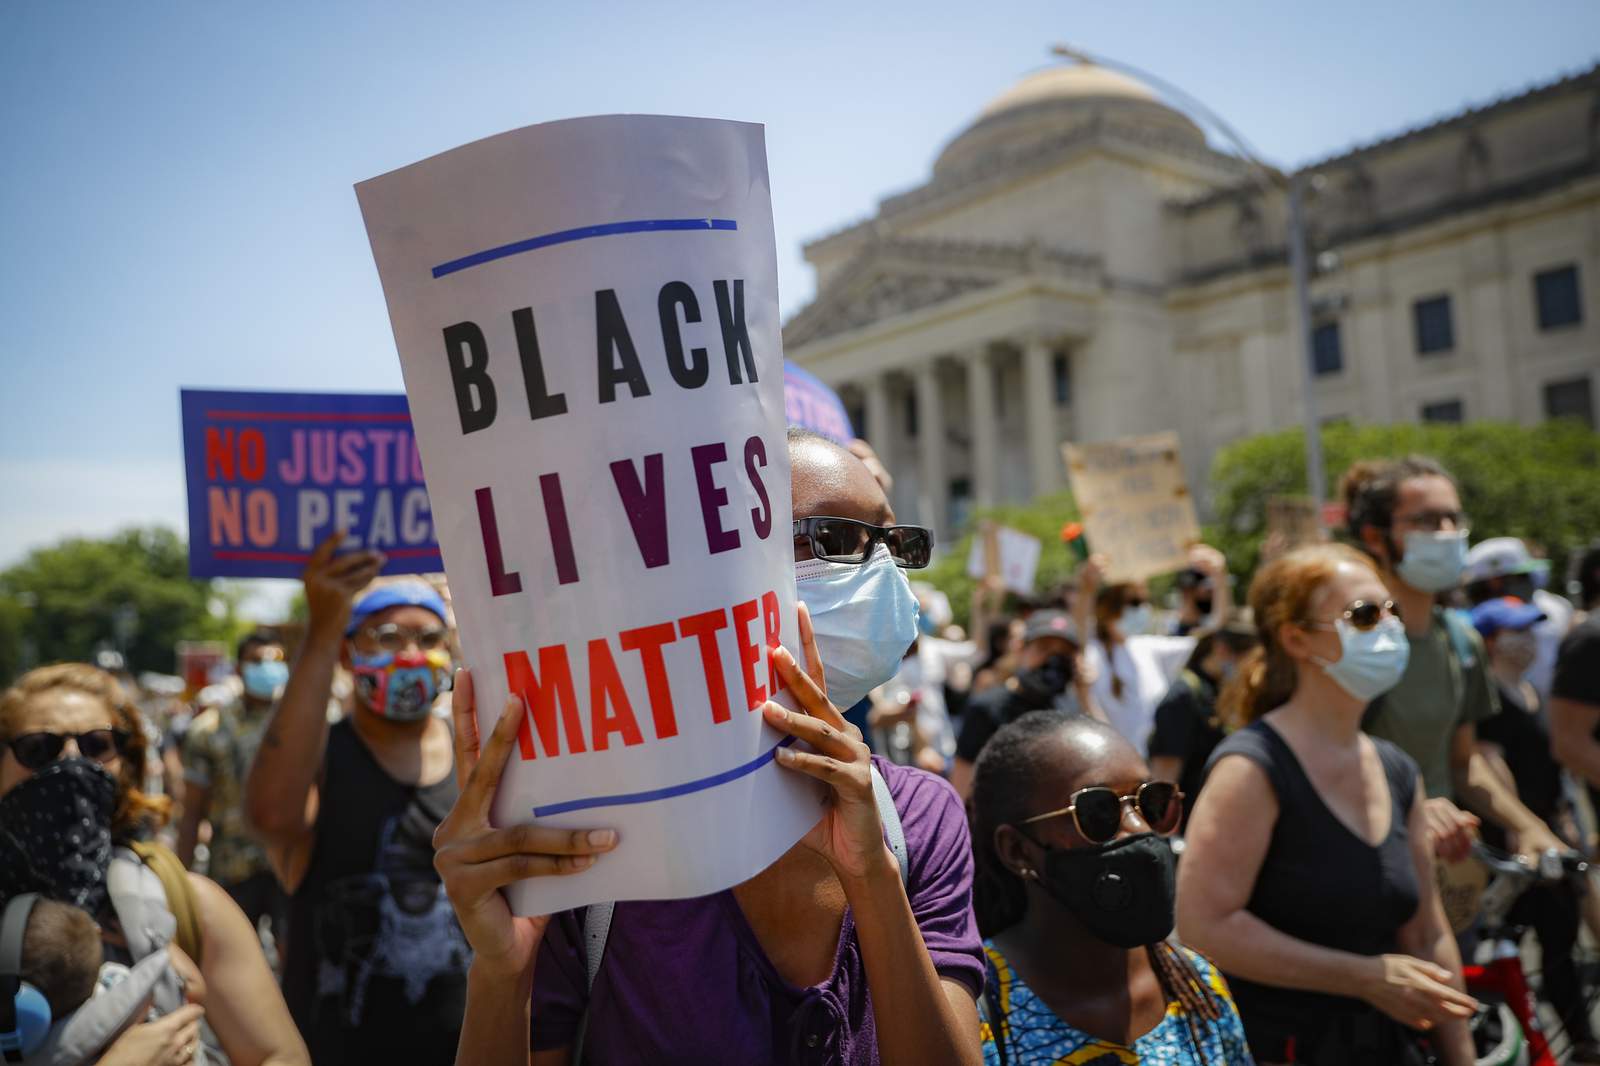 Facebook groups pivot to attacks on Black Lives Matter